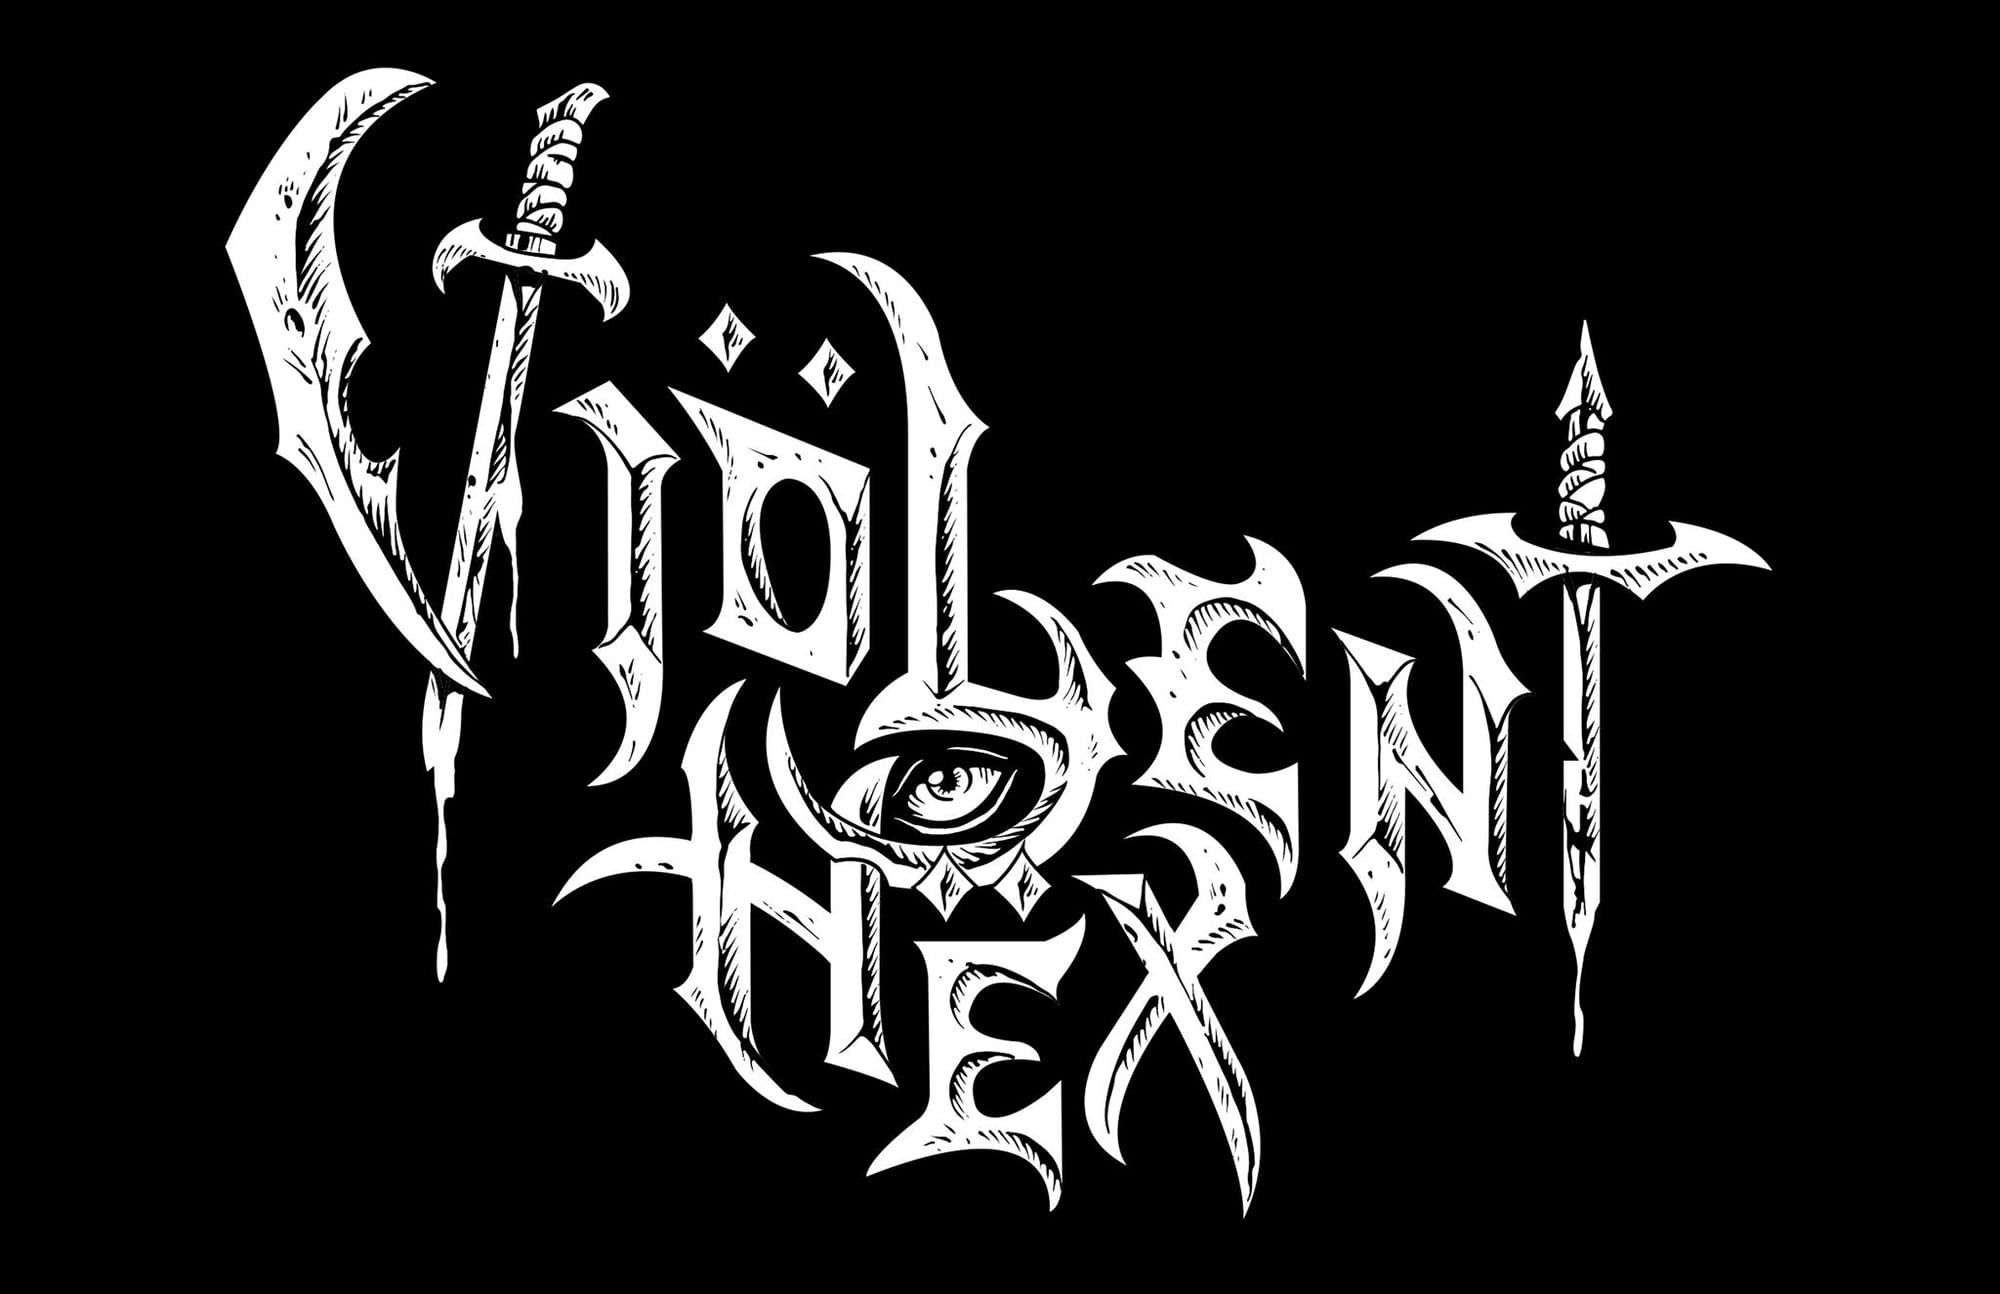 Interview with VIOLENT HEX